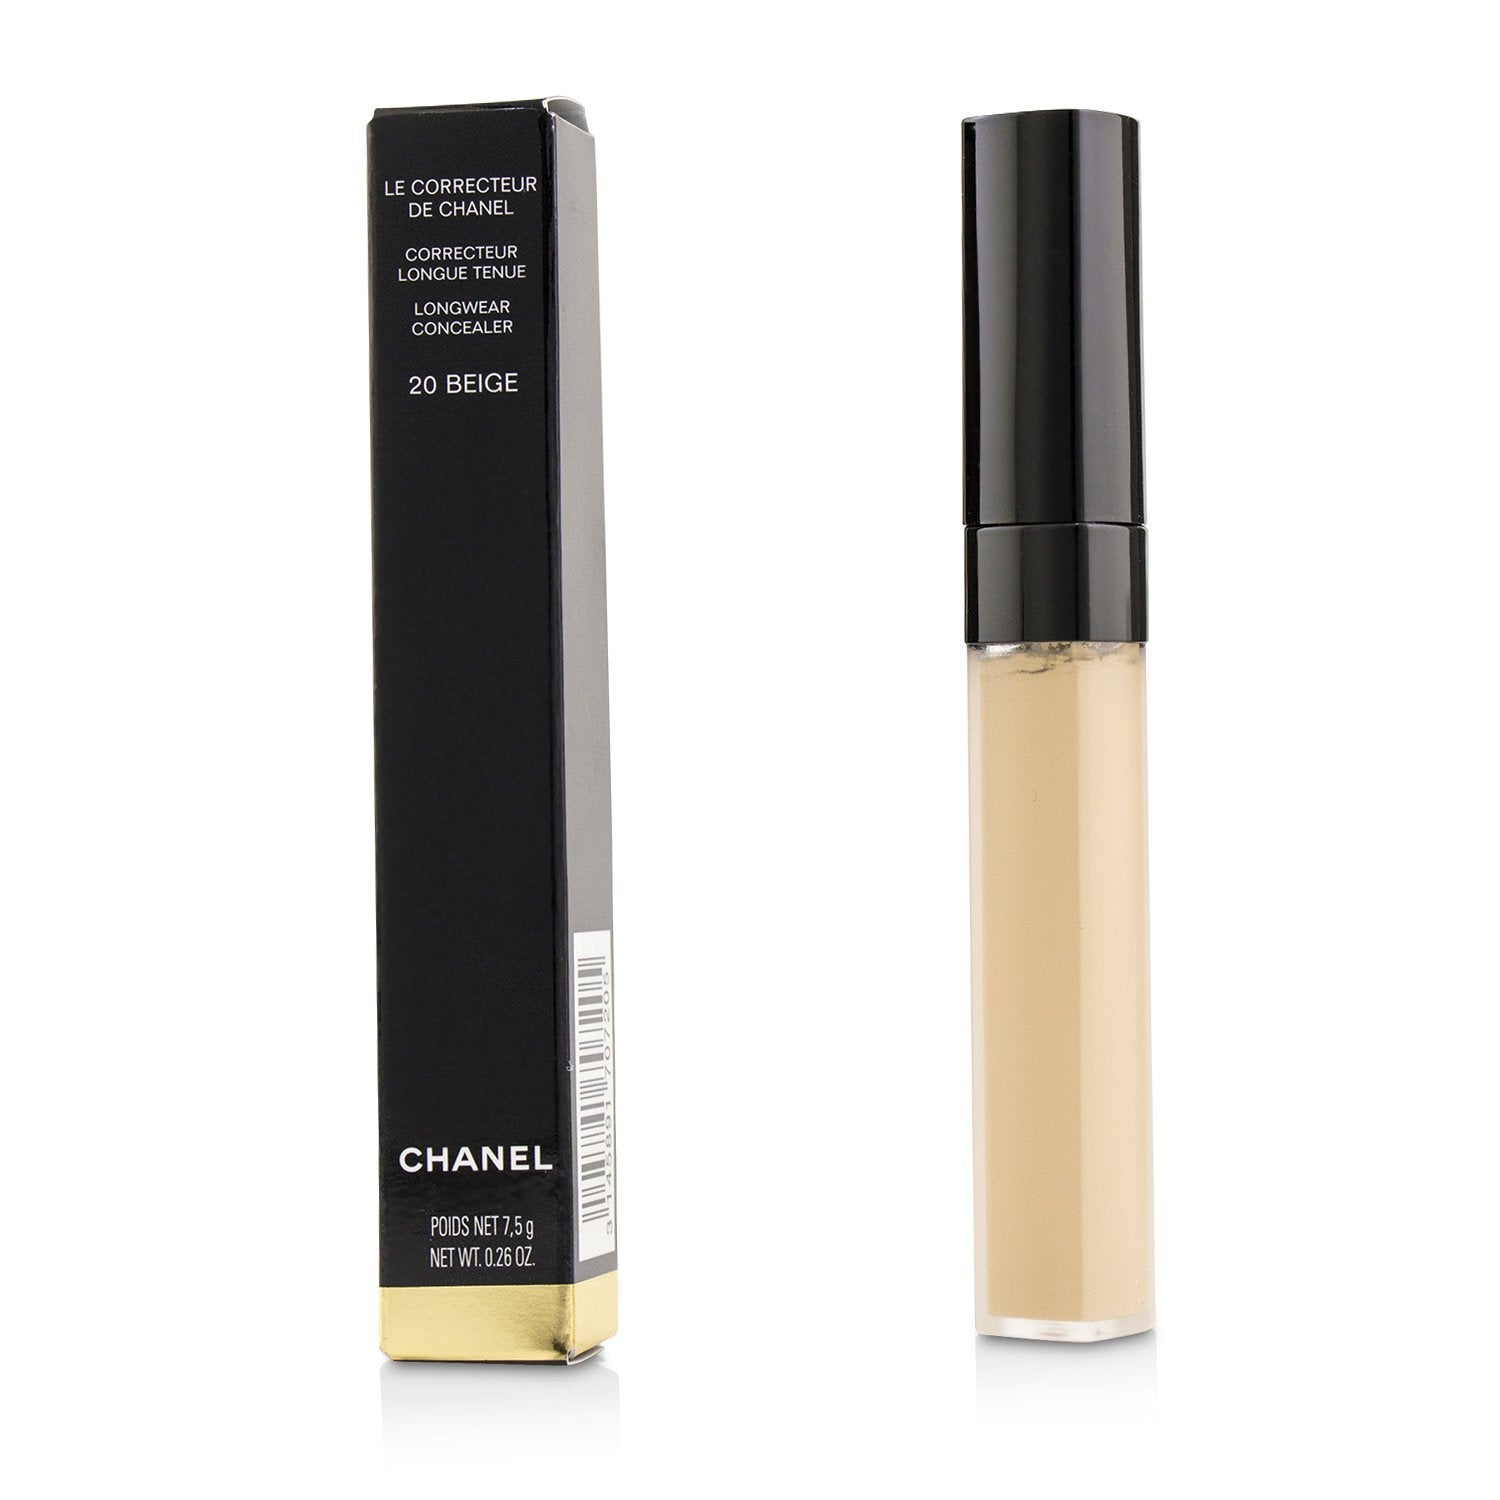 Chanel Le Correcteur De Chanel Longwear Concealer - # 20 Beige 7.5